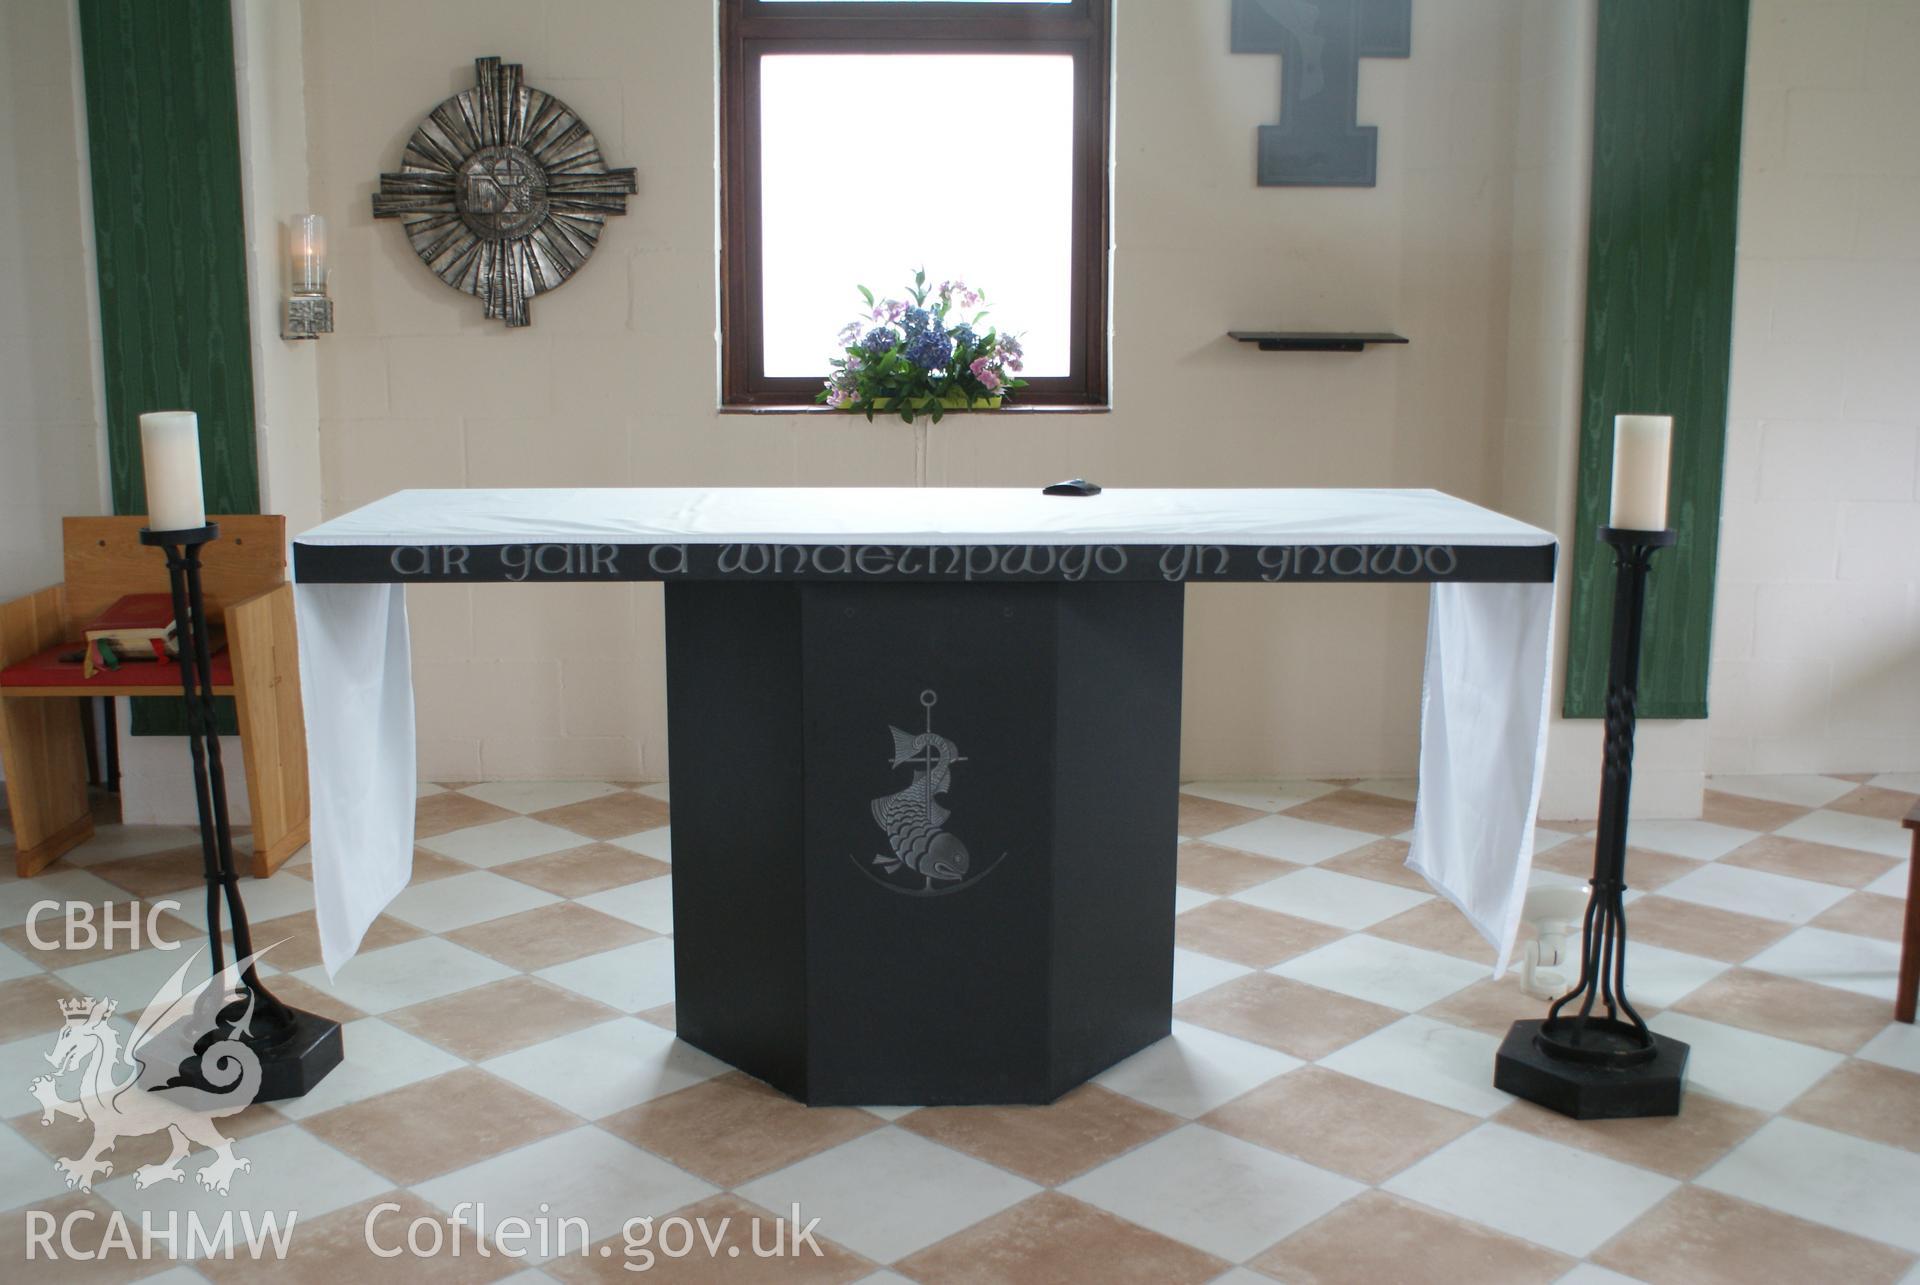 Digital colour photograph showing the Aberllefenni slate altar at St Joseph's Catholic church, Pwllheli.